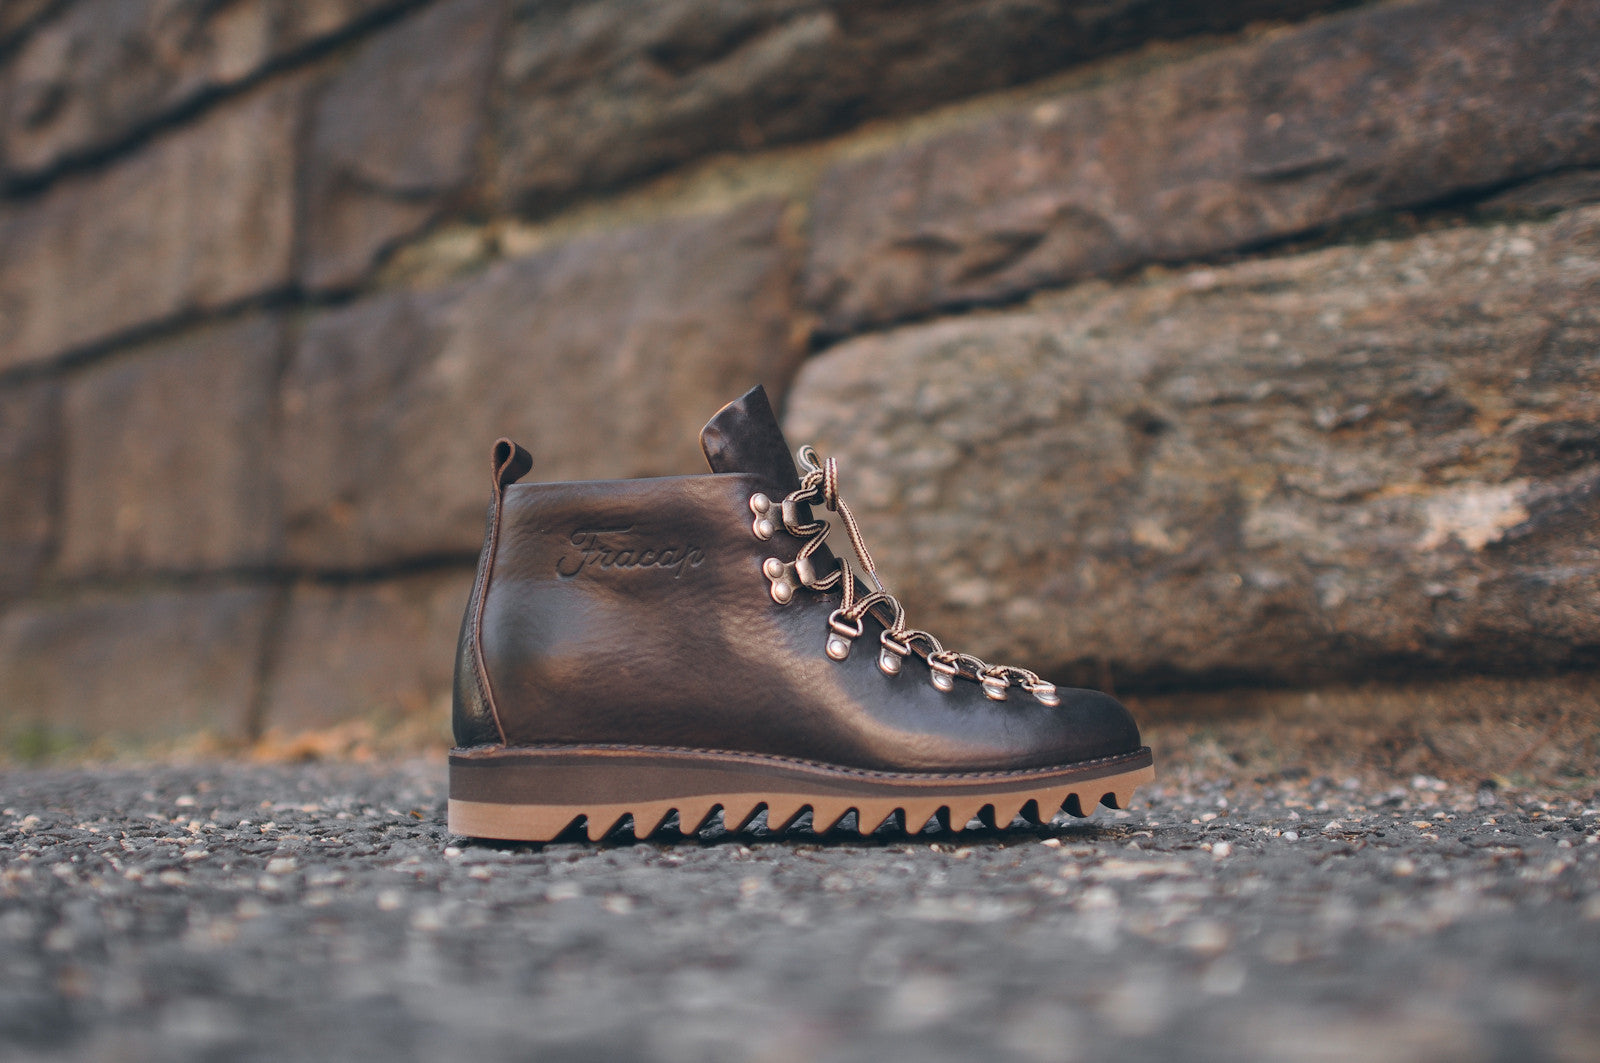 Fracap M120 Ripple Sole Hiking Boot - Dark Brown | Kith NYC